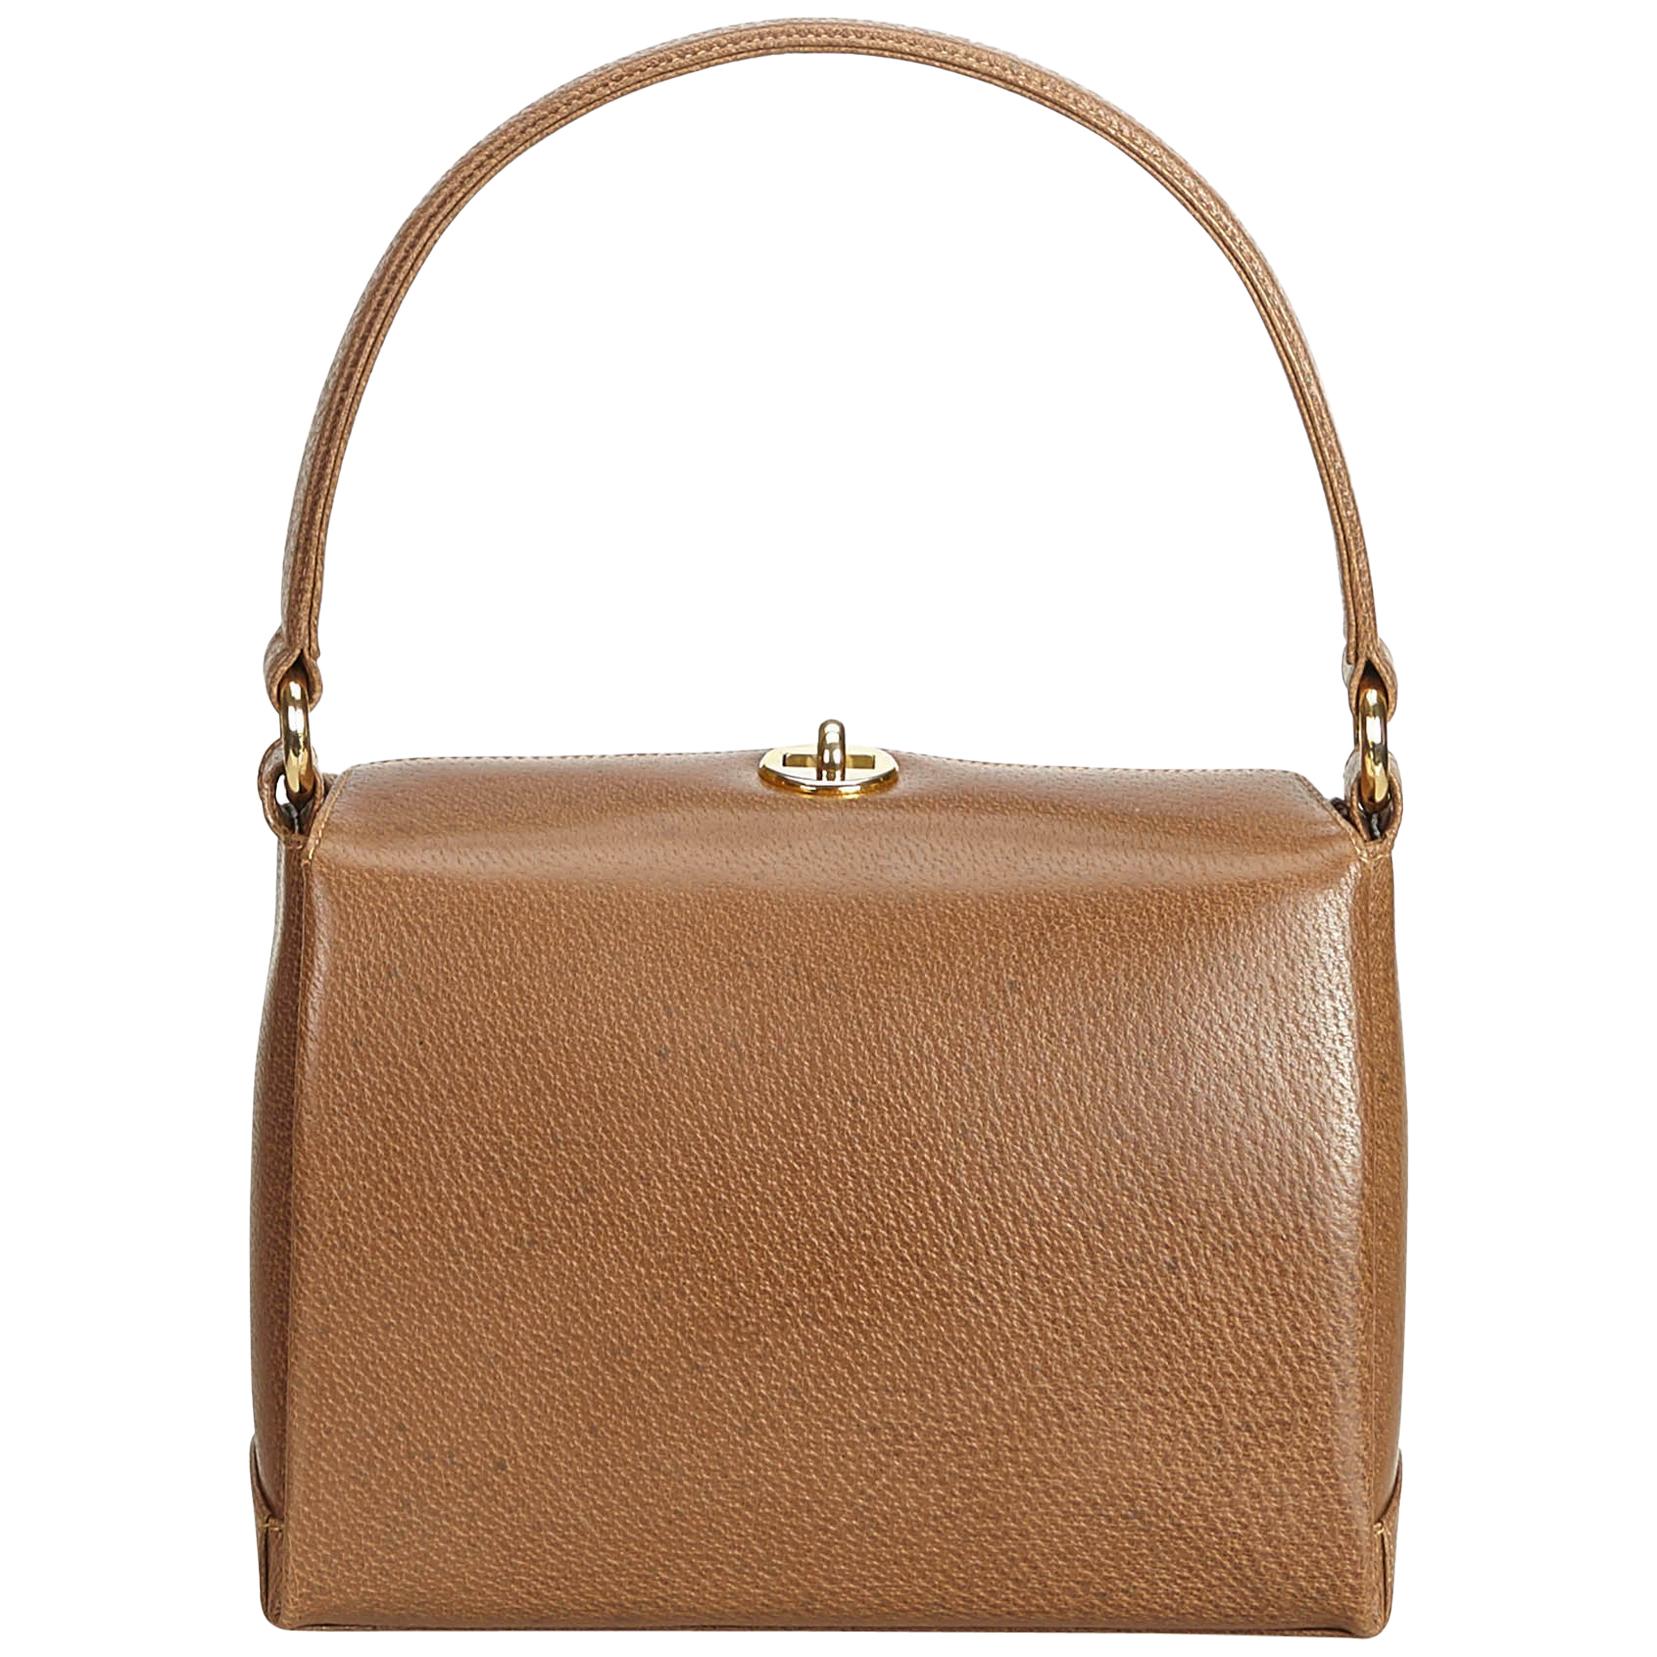 Gucci Brown x Light Brown Old Gucci Leather Handbag